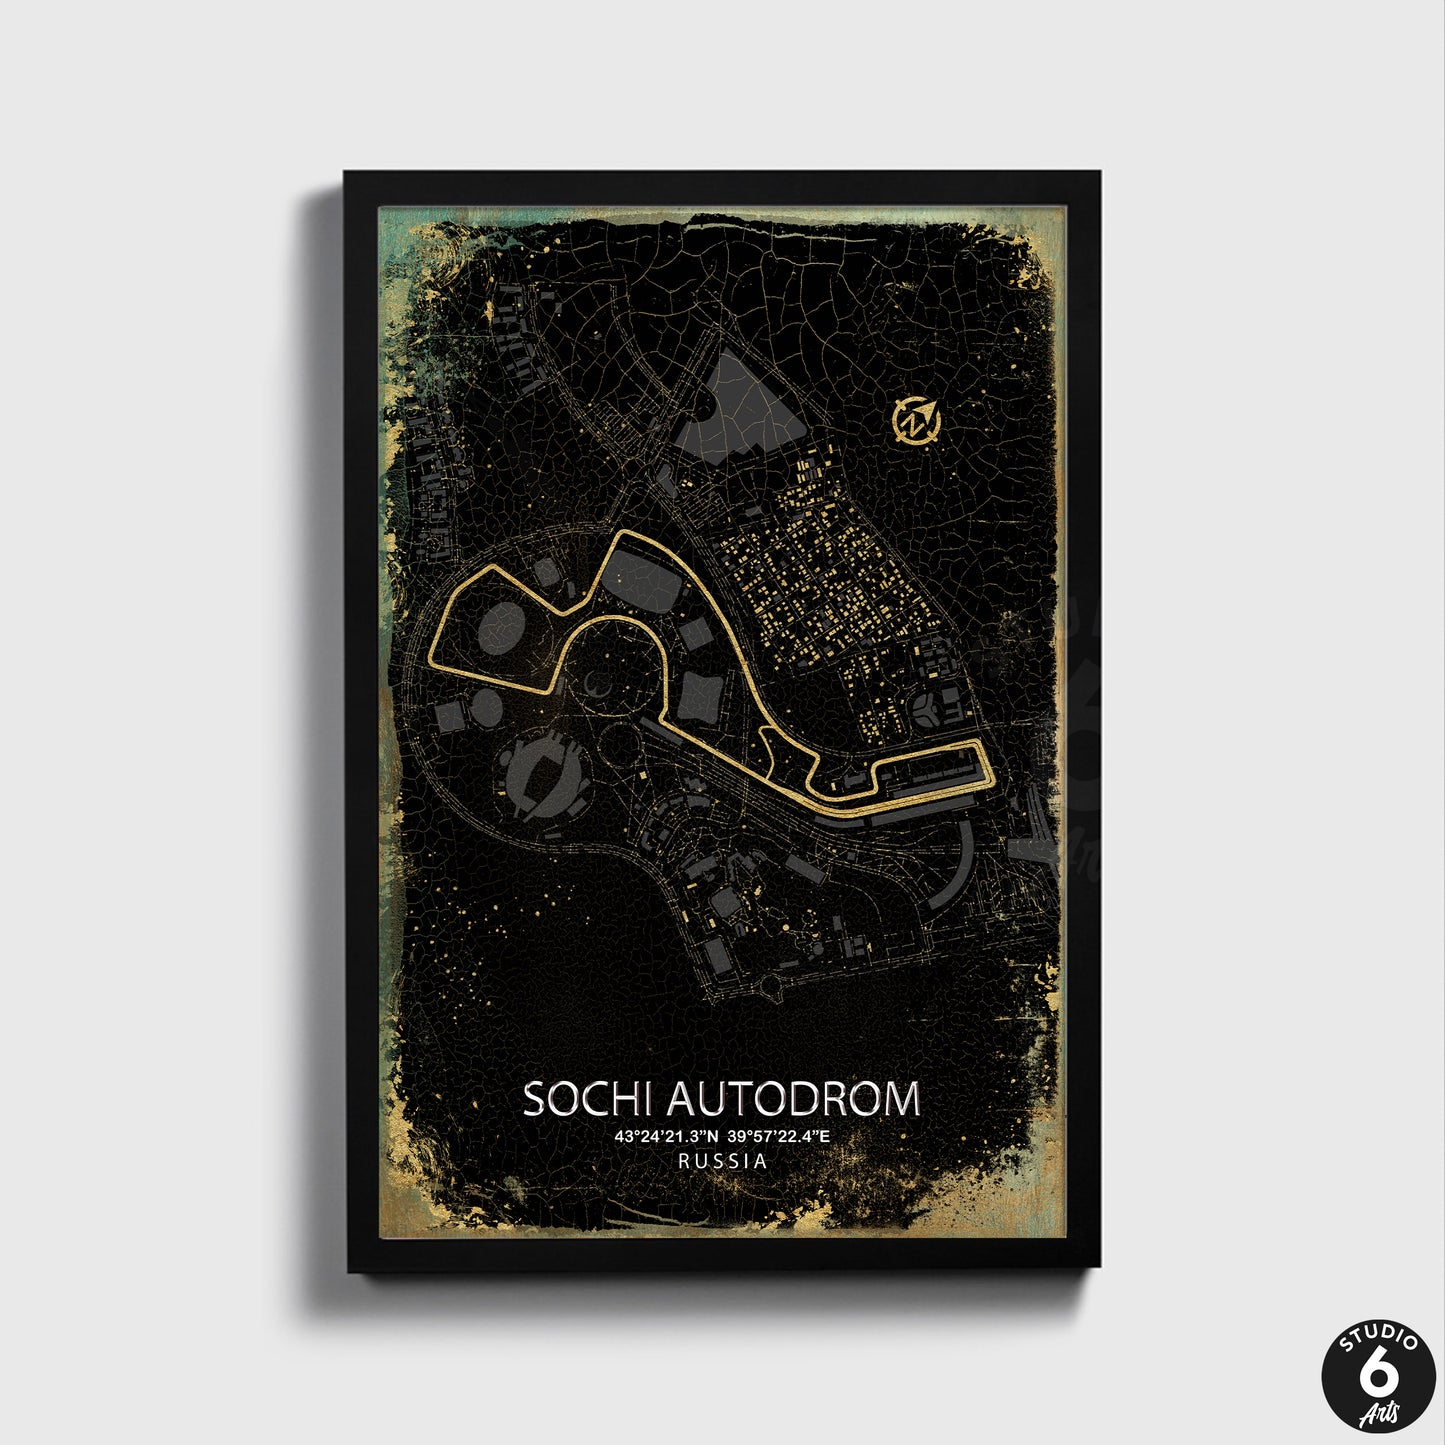 Sochi Autodrom Racing Track Poster, Race Map Print